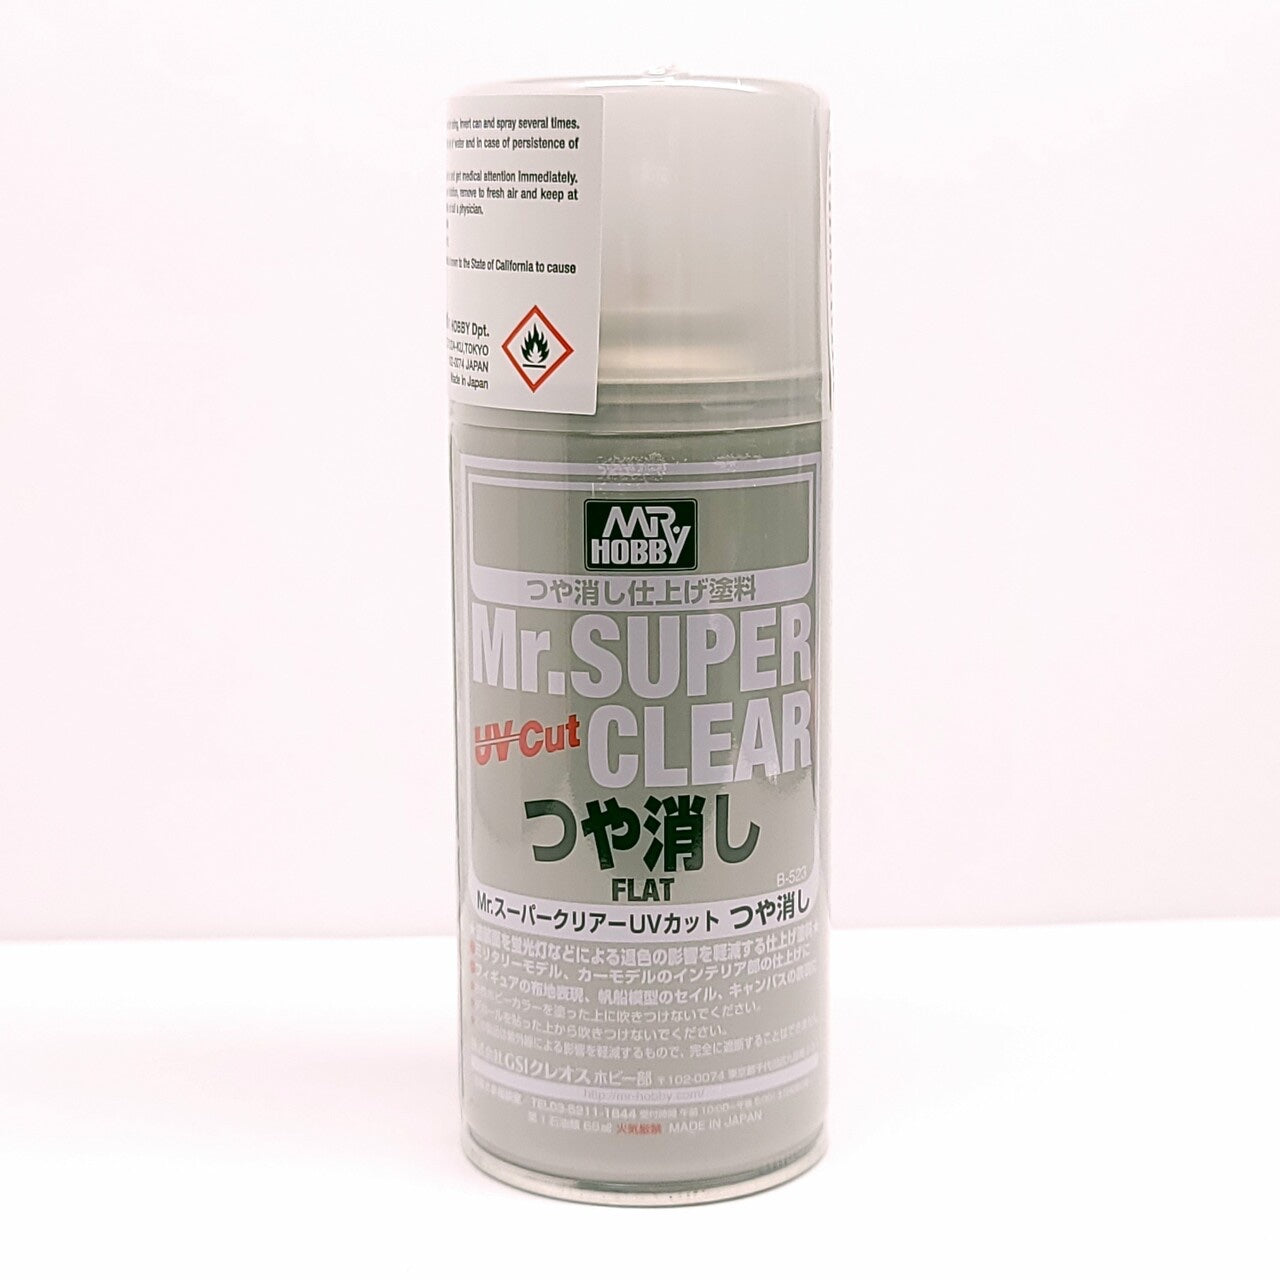  Mr. Super Clear UV Cut Flat Spray : Tools & Home